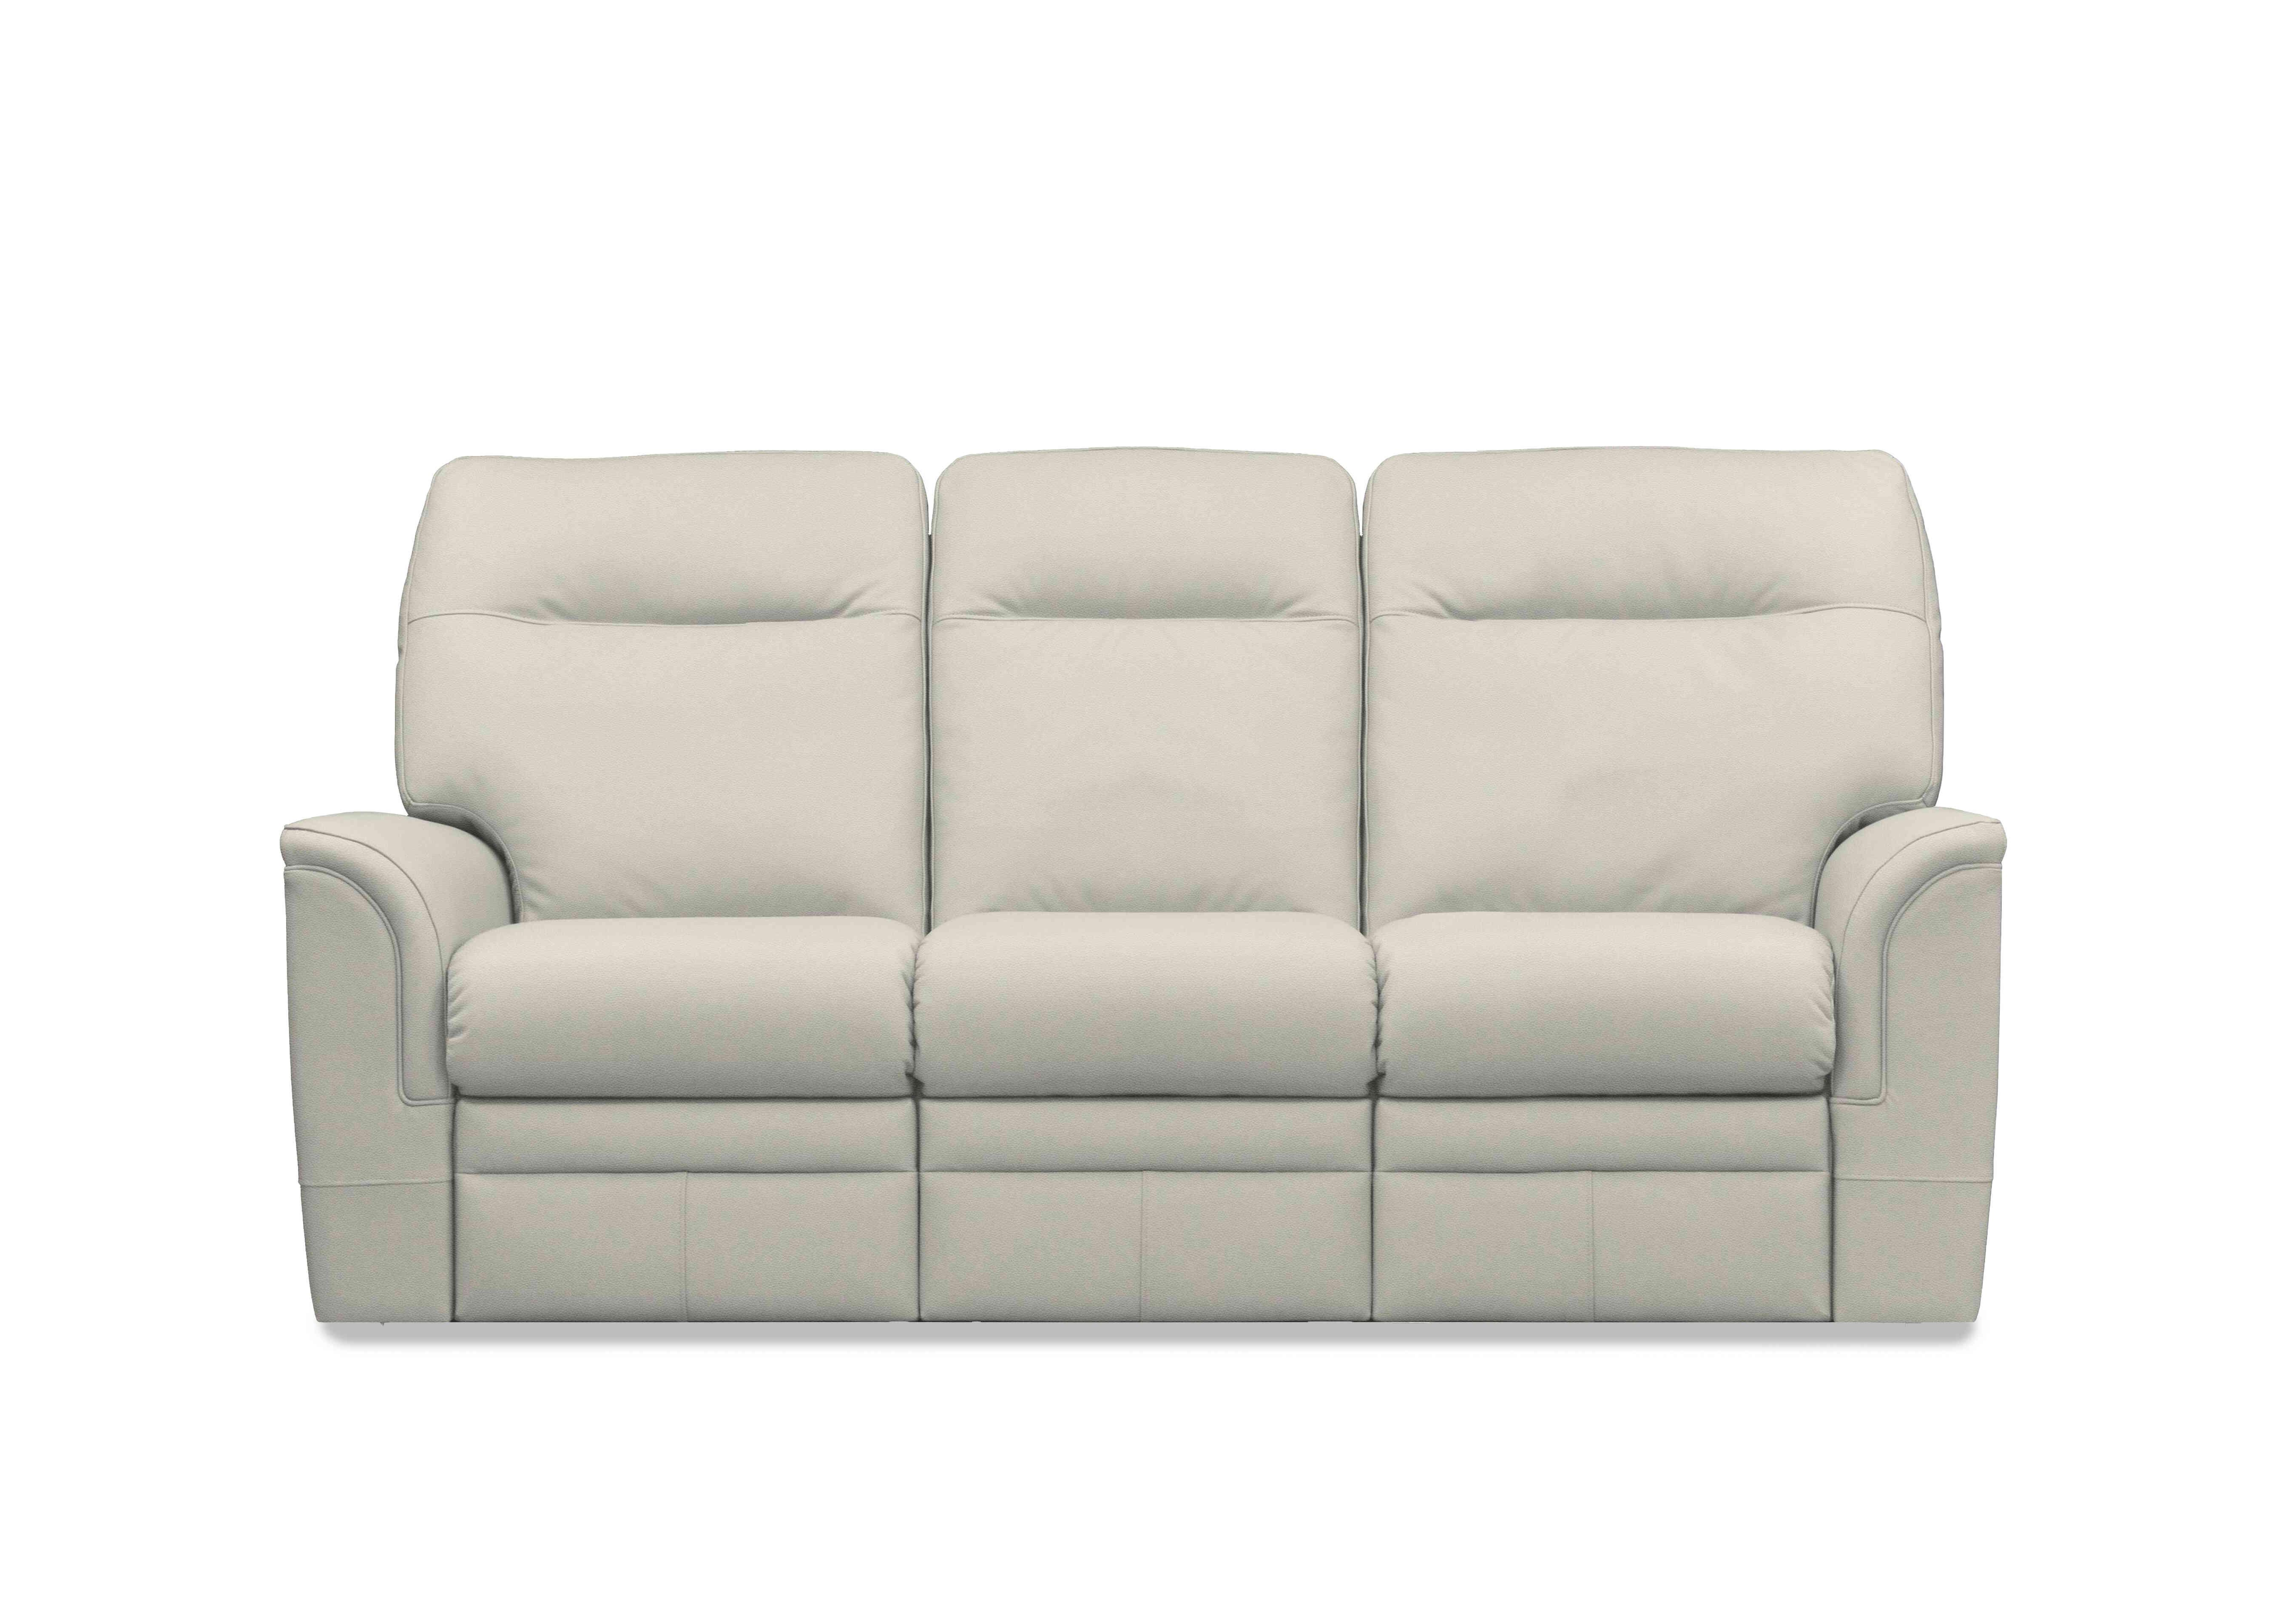 Hudson 23 Leather 3 Seater Sofa in Como Dove 0053051-0092 on Furniture Village